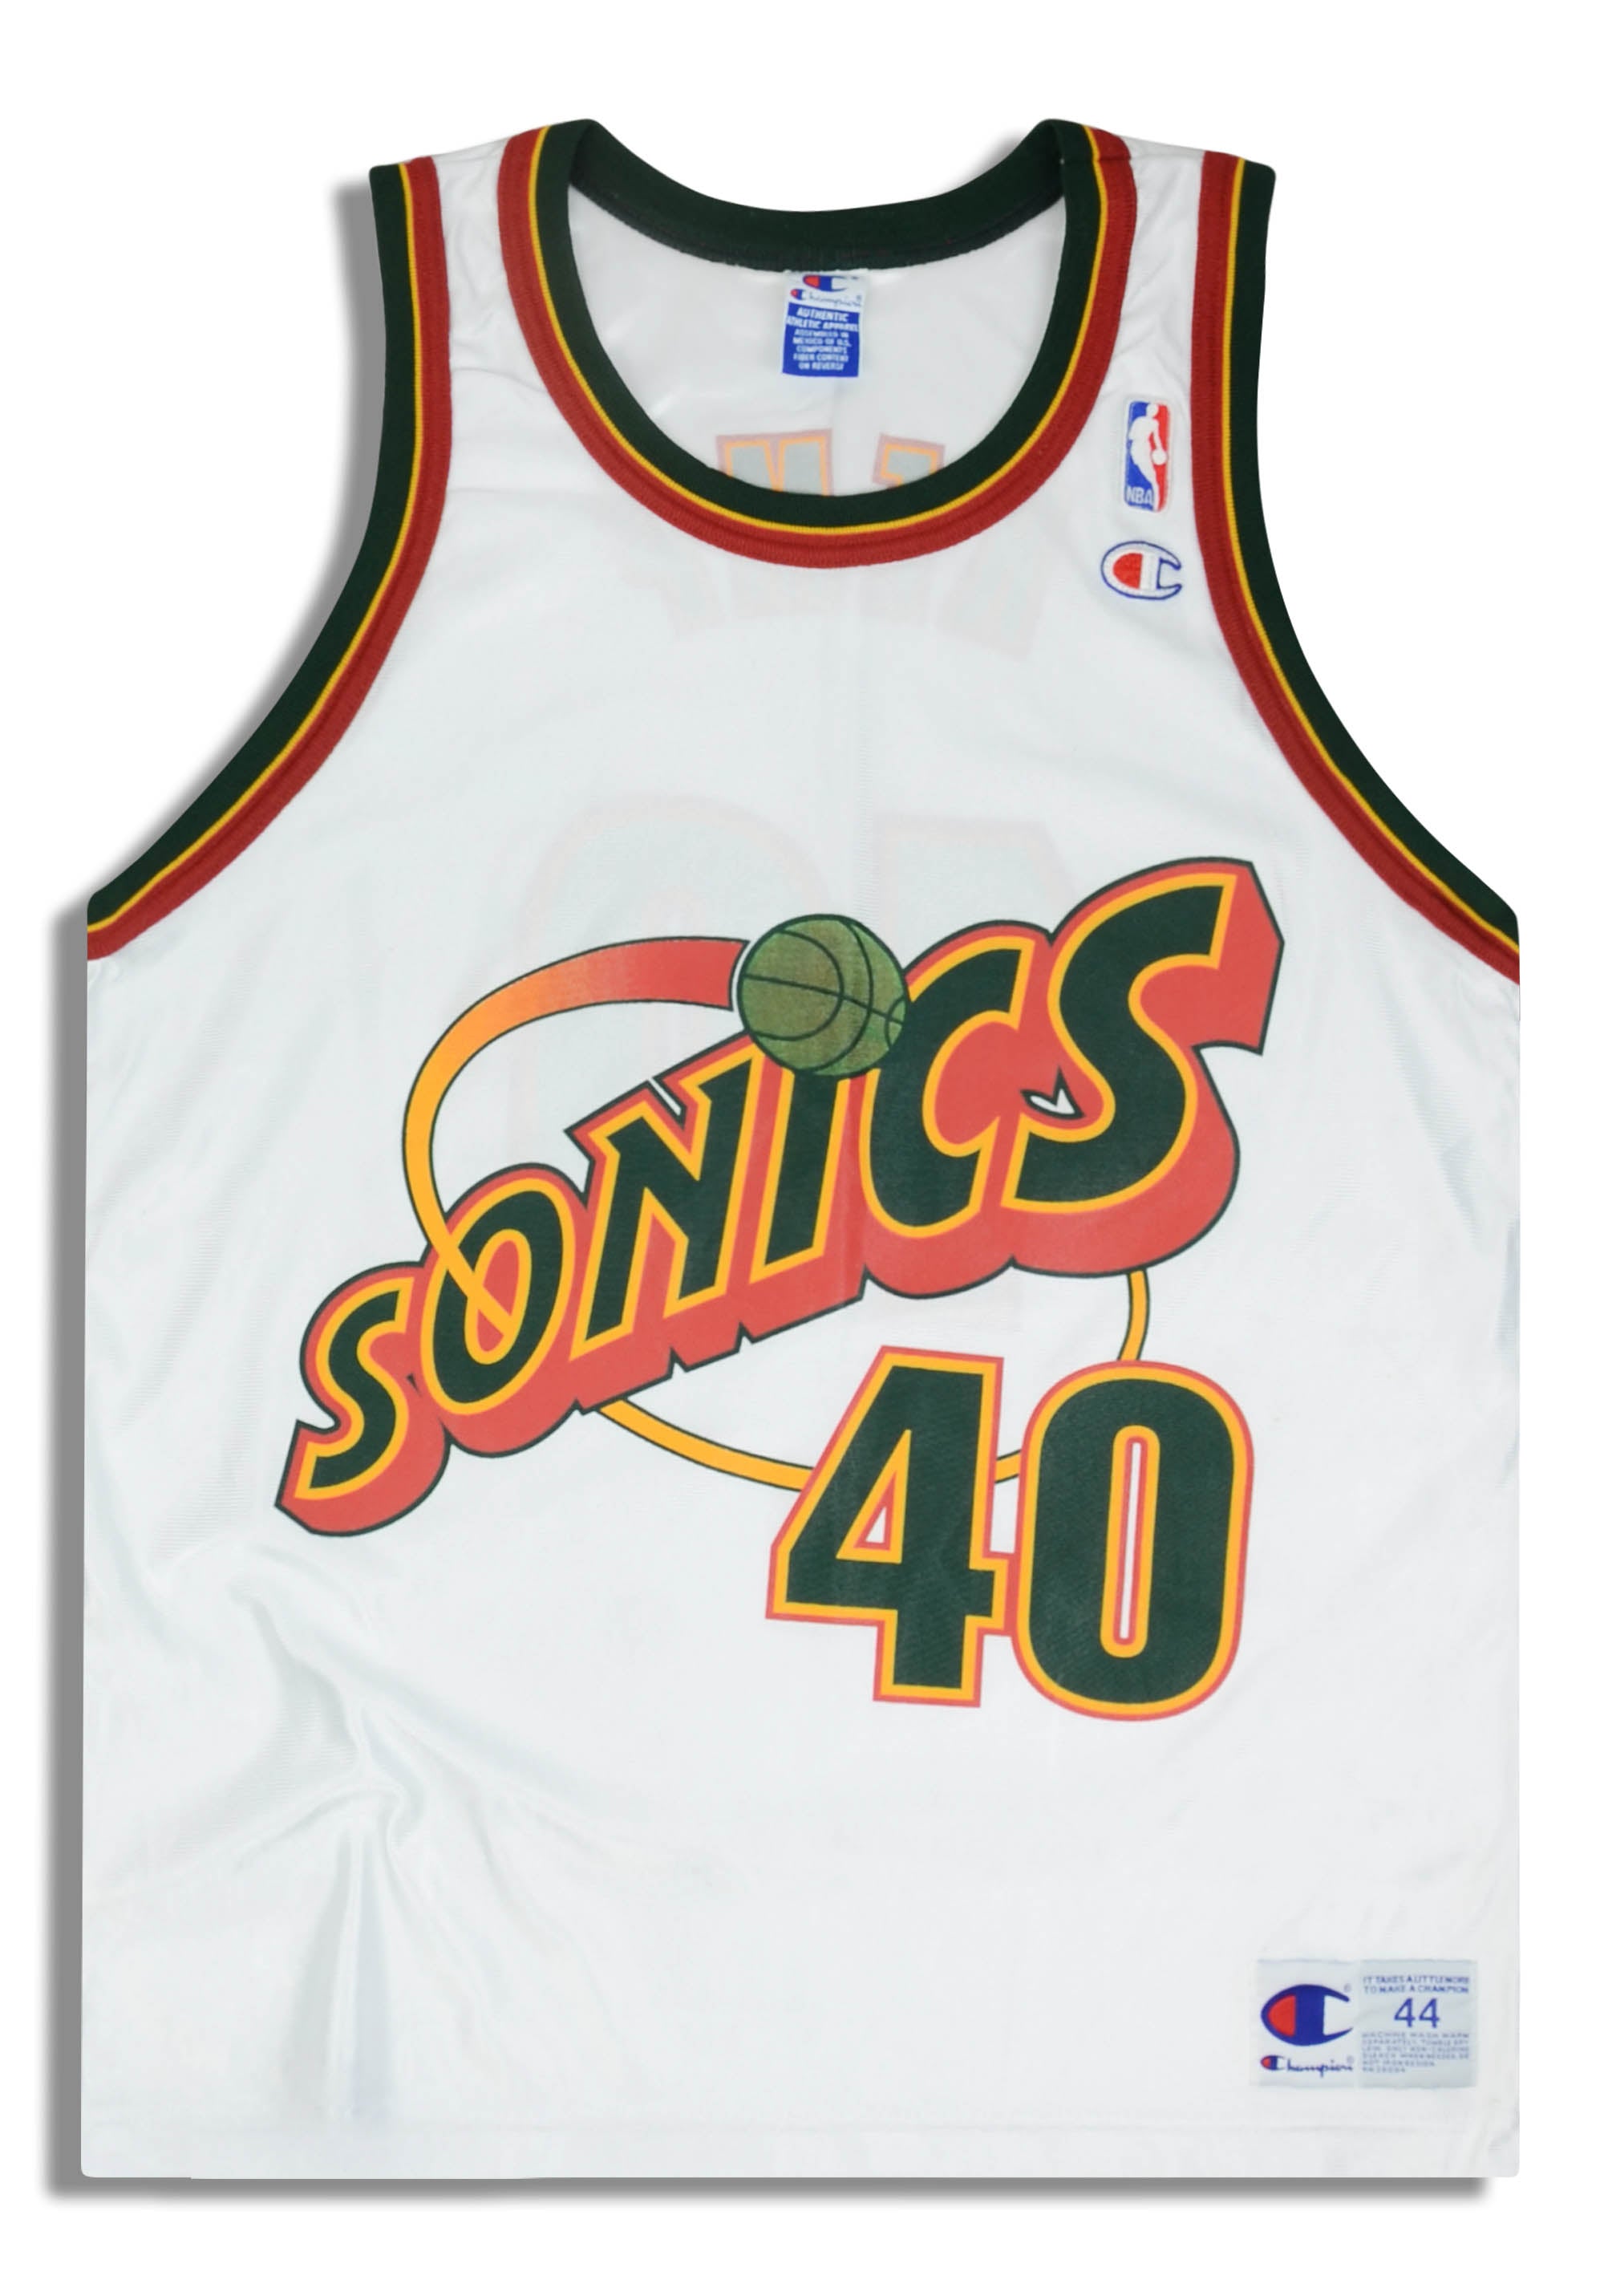 1996 seattle supersonics jersey